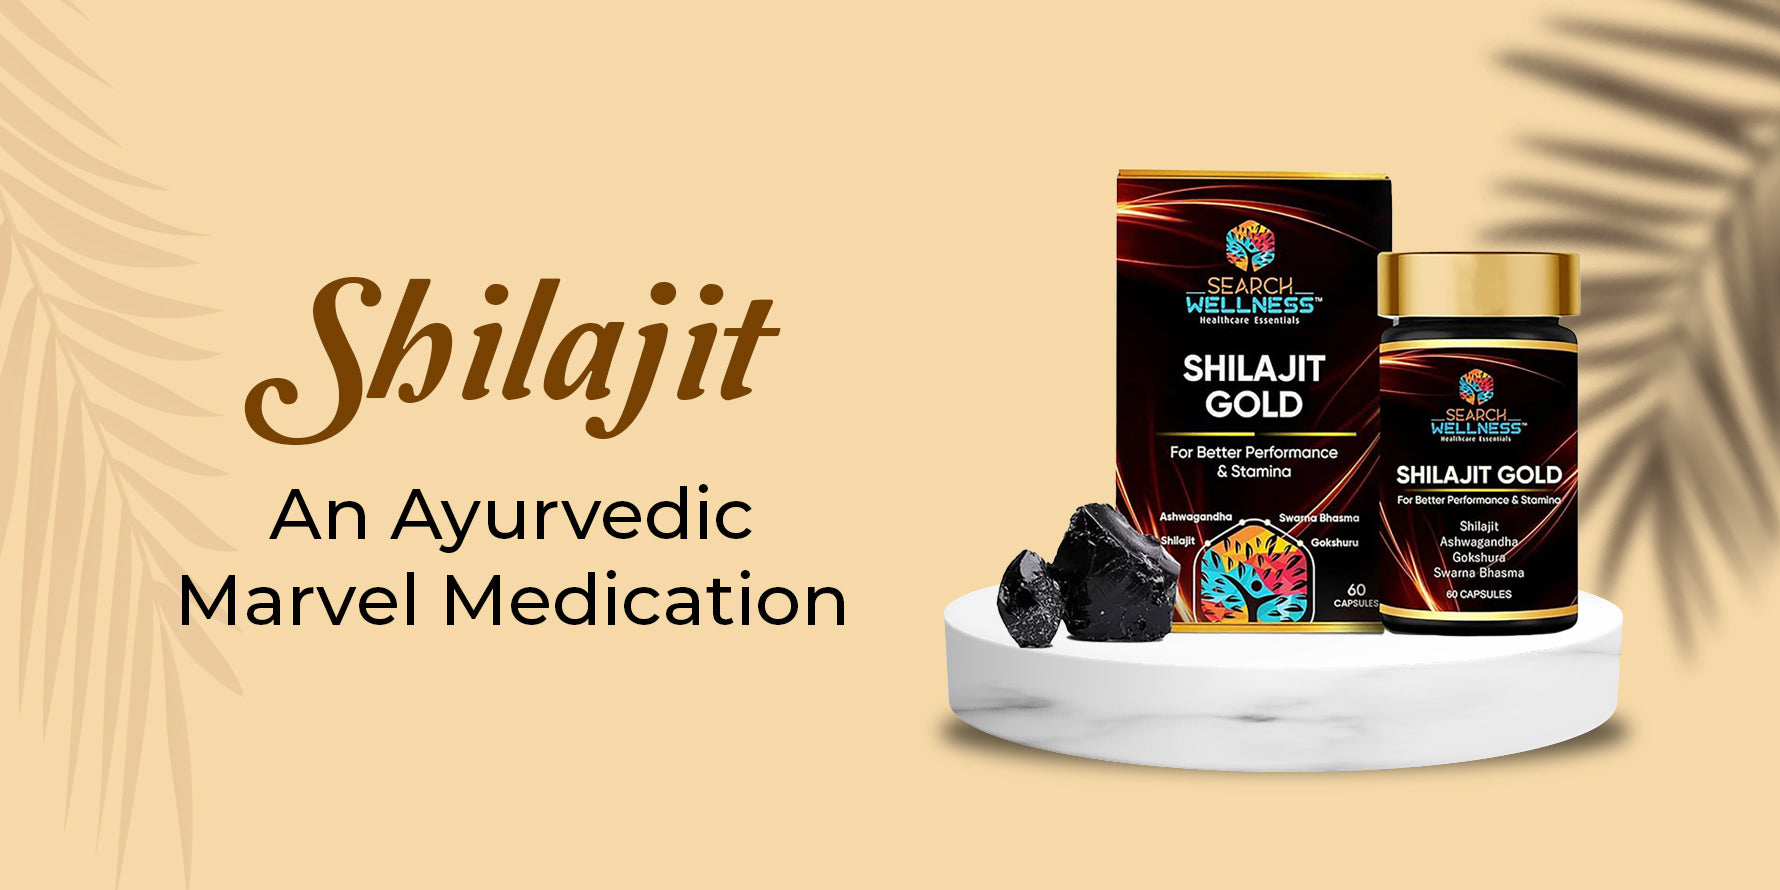 Shilajit - An Ayurvedic Marvel Medication